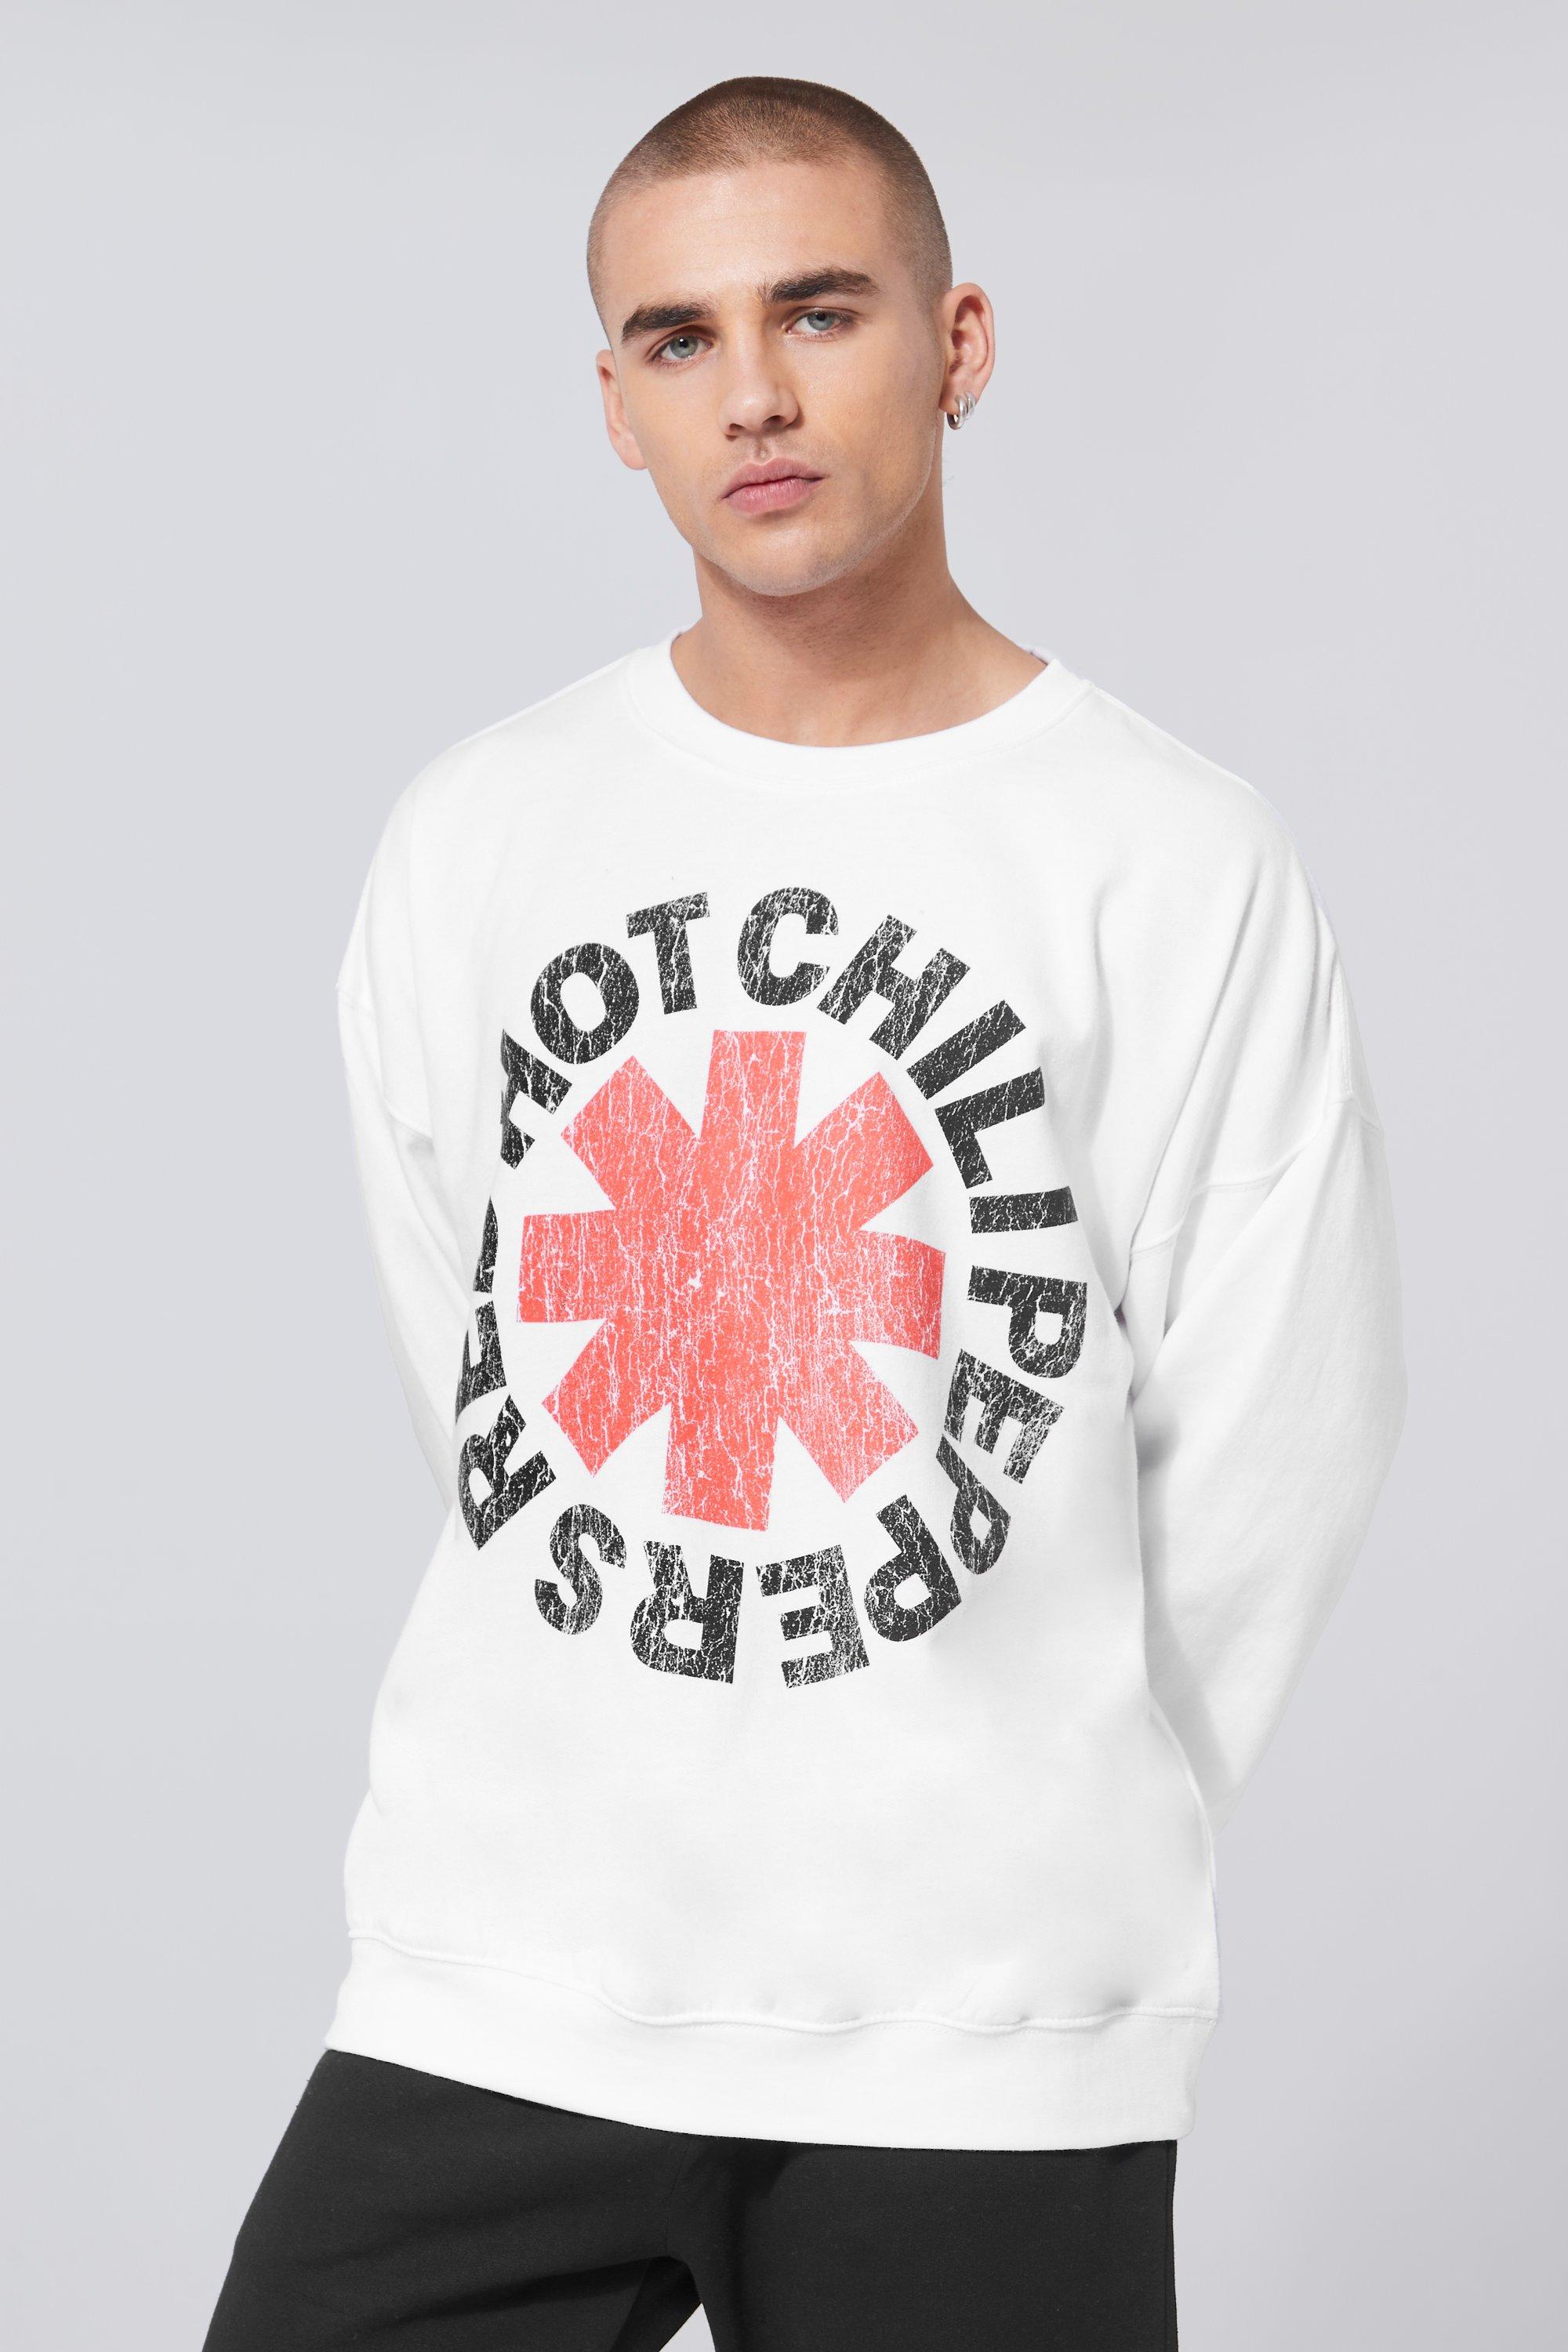 | Hot Red Peppers boohooMAN USA Chili Oversized Sweatshirt